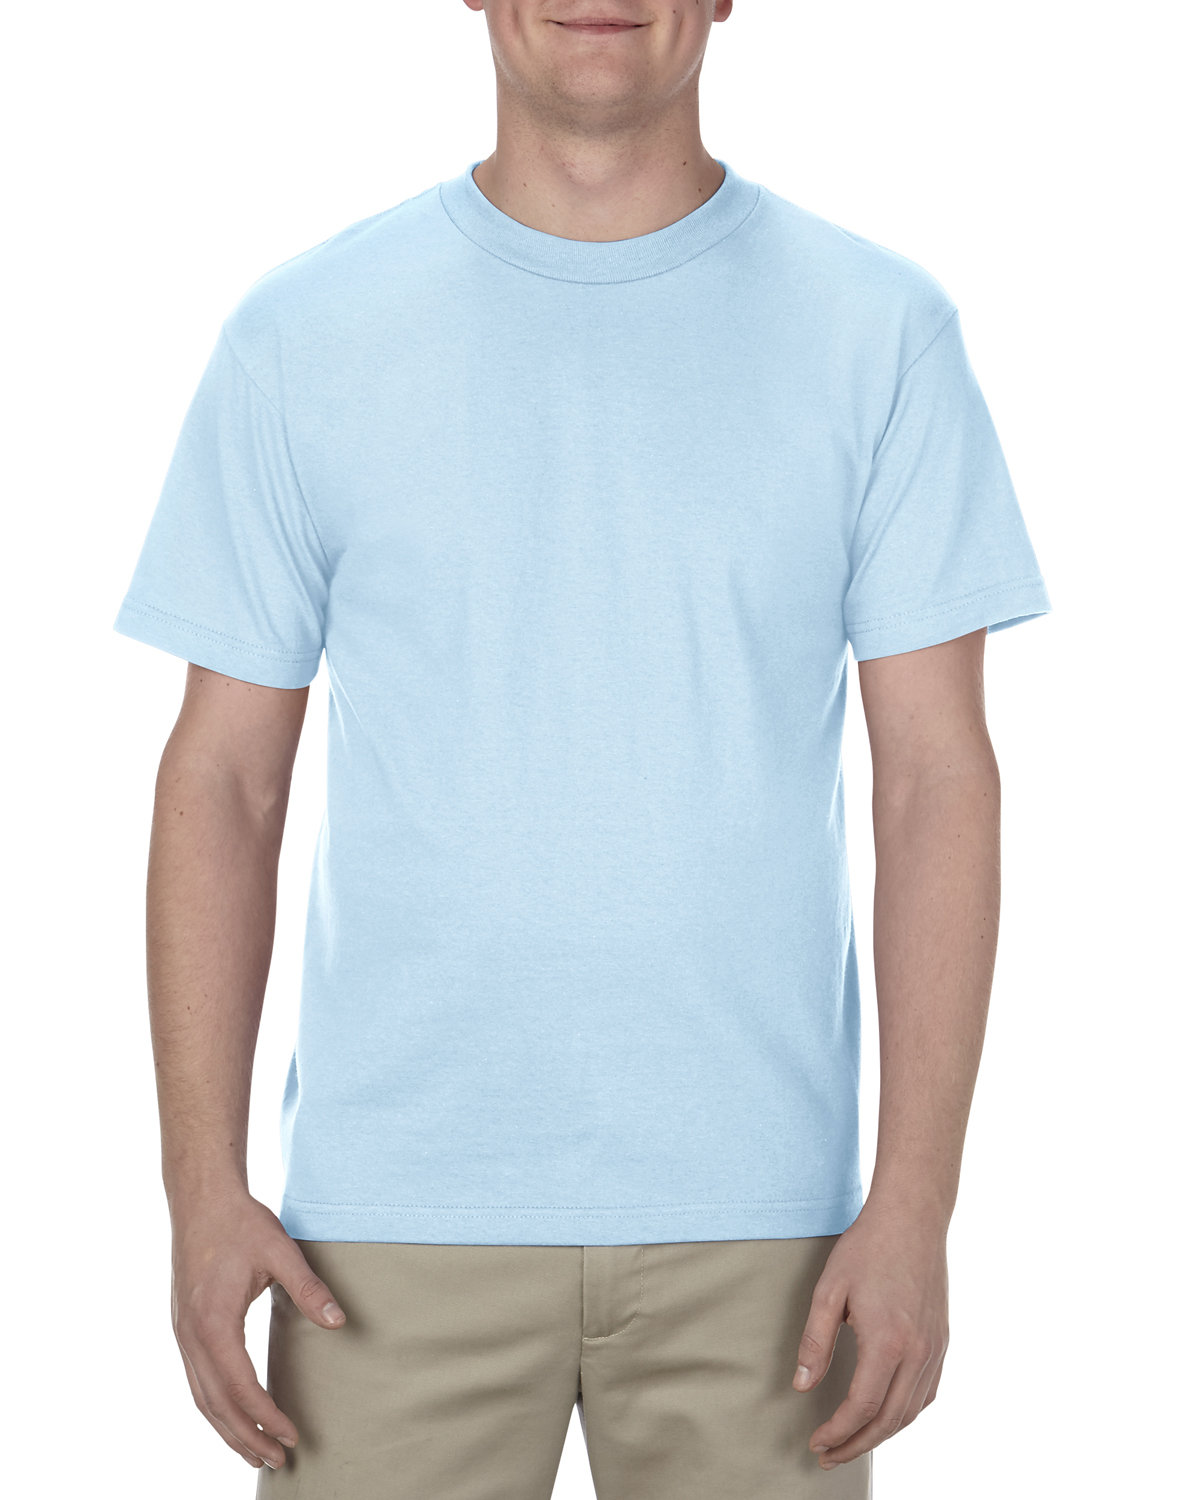 American Apparel Unisex Heavyweight Cotton T-Shirt powder blue 